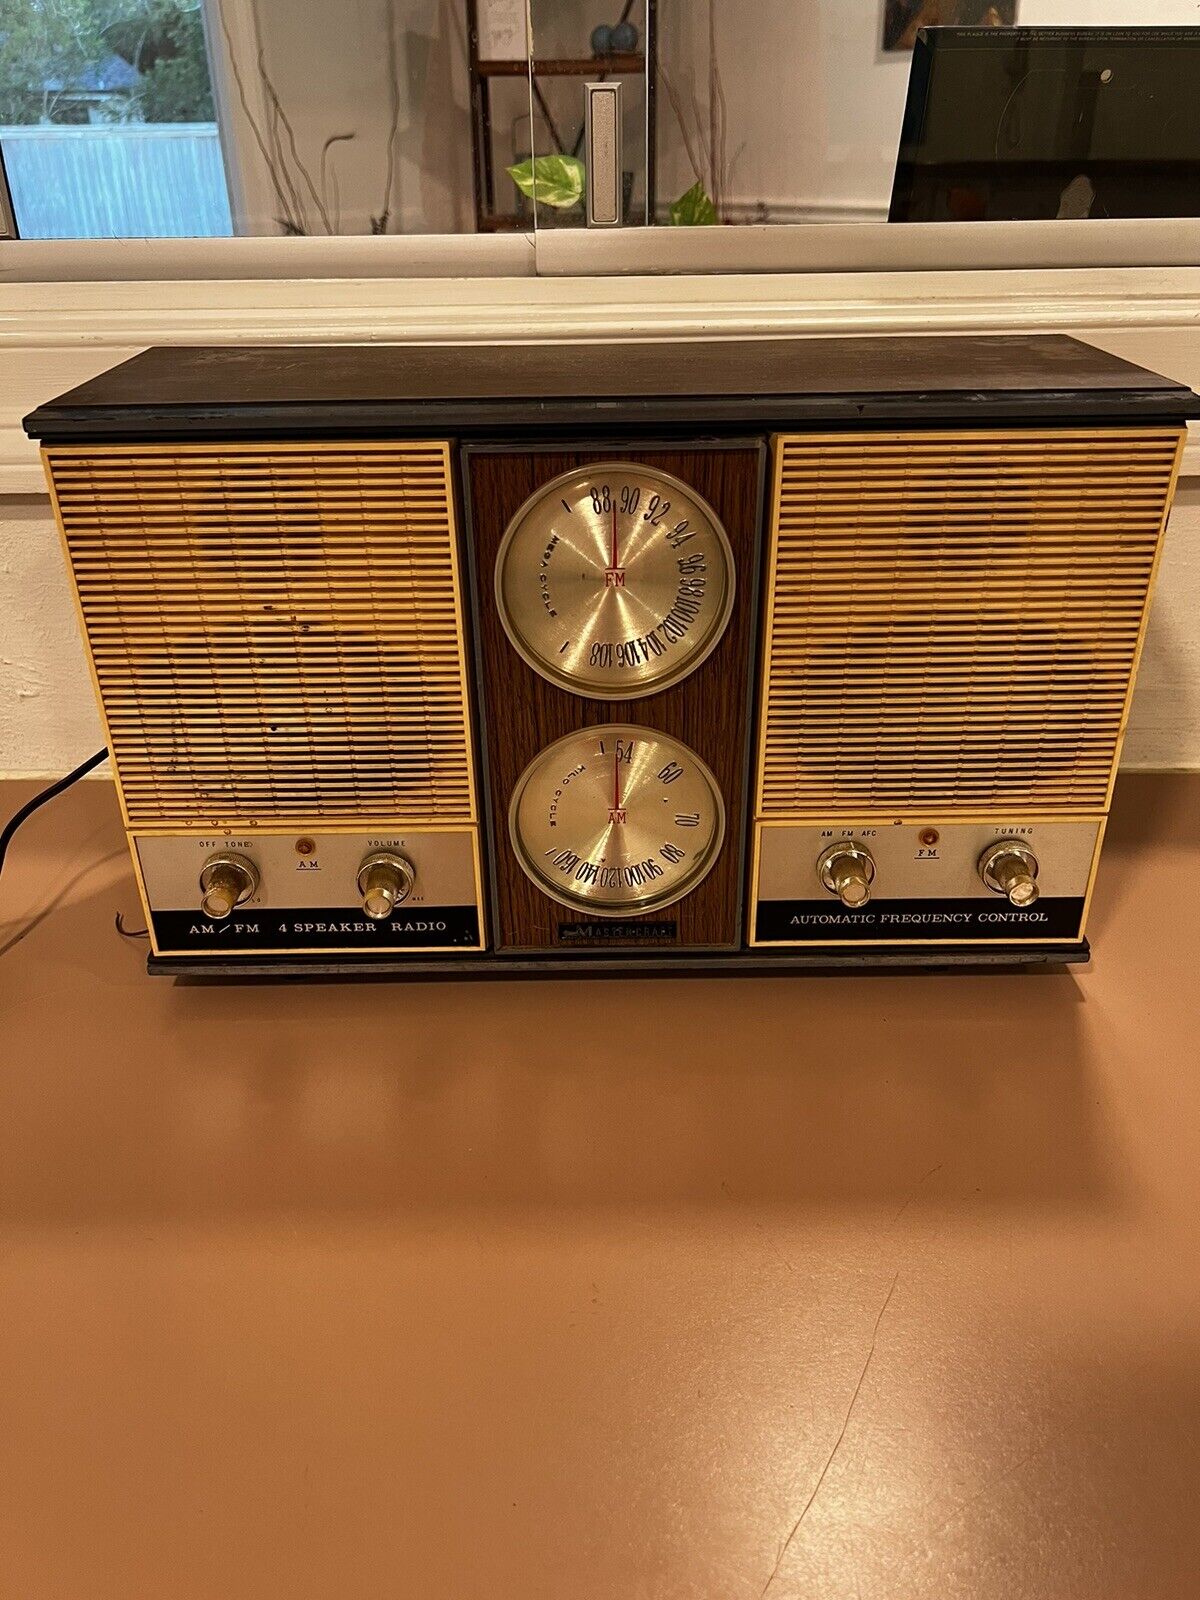 Master Craft 1962 AM-FM Radio #423167 “As Is” Beautiful Piece 4 Speakers